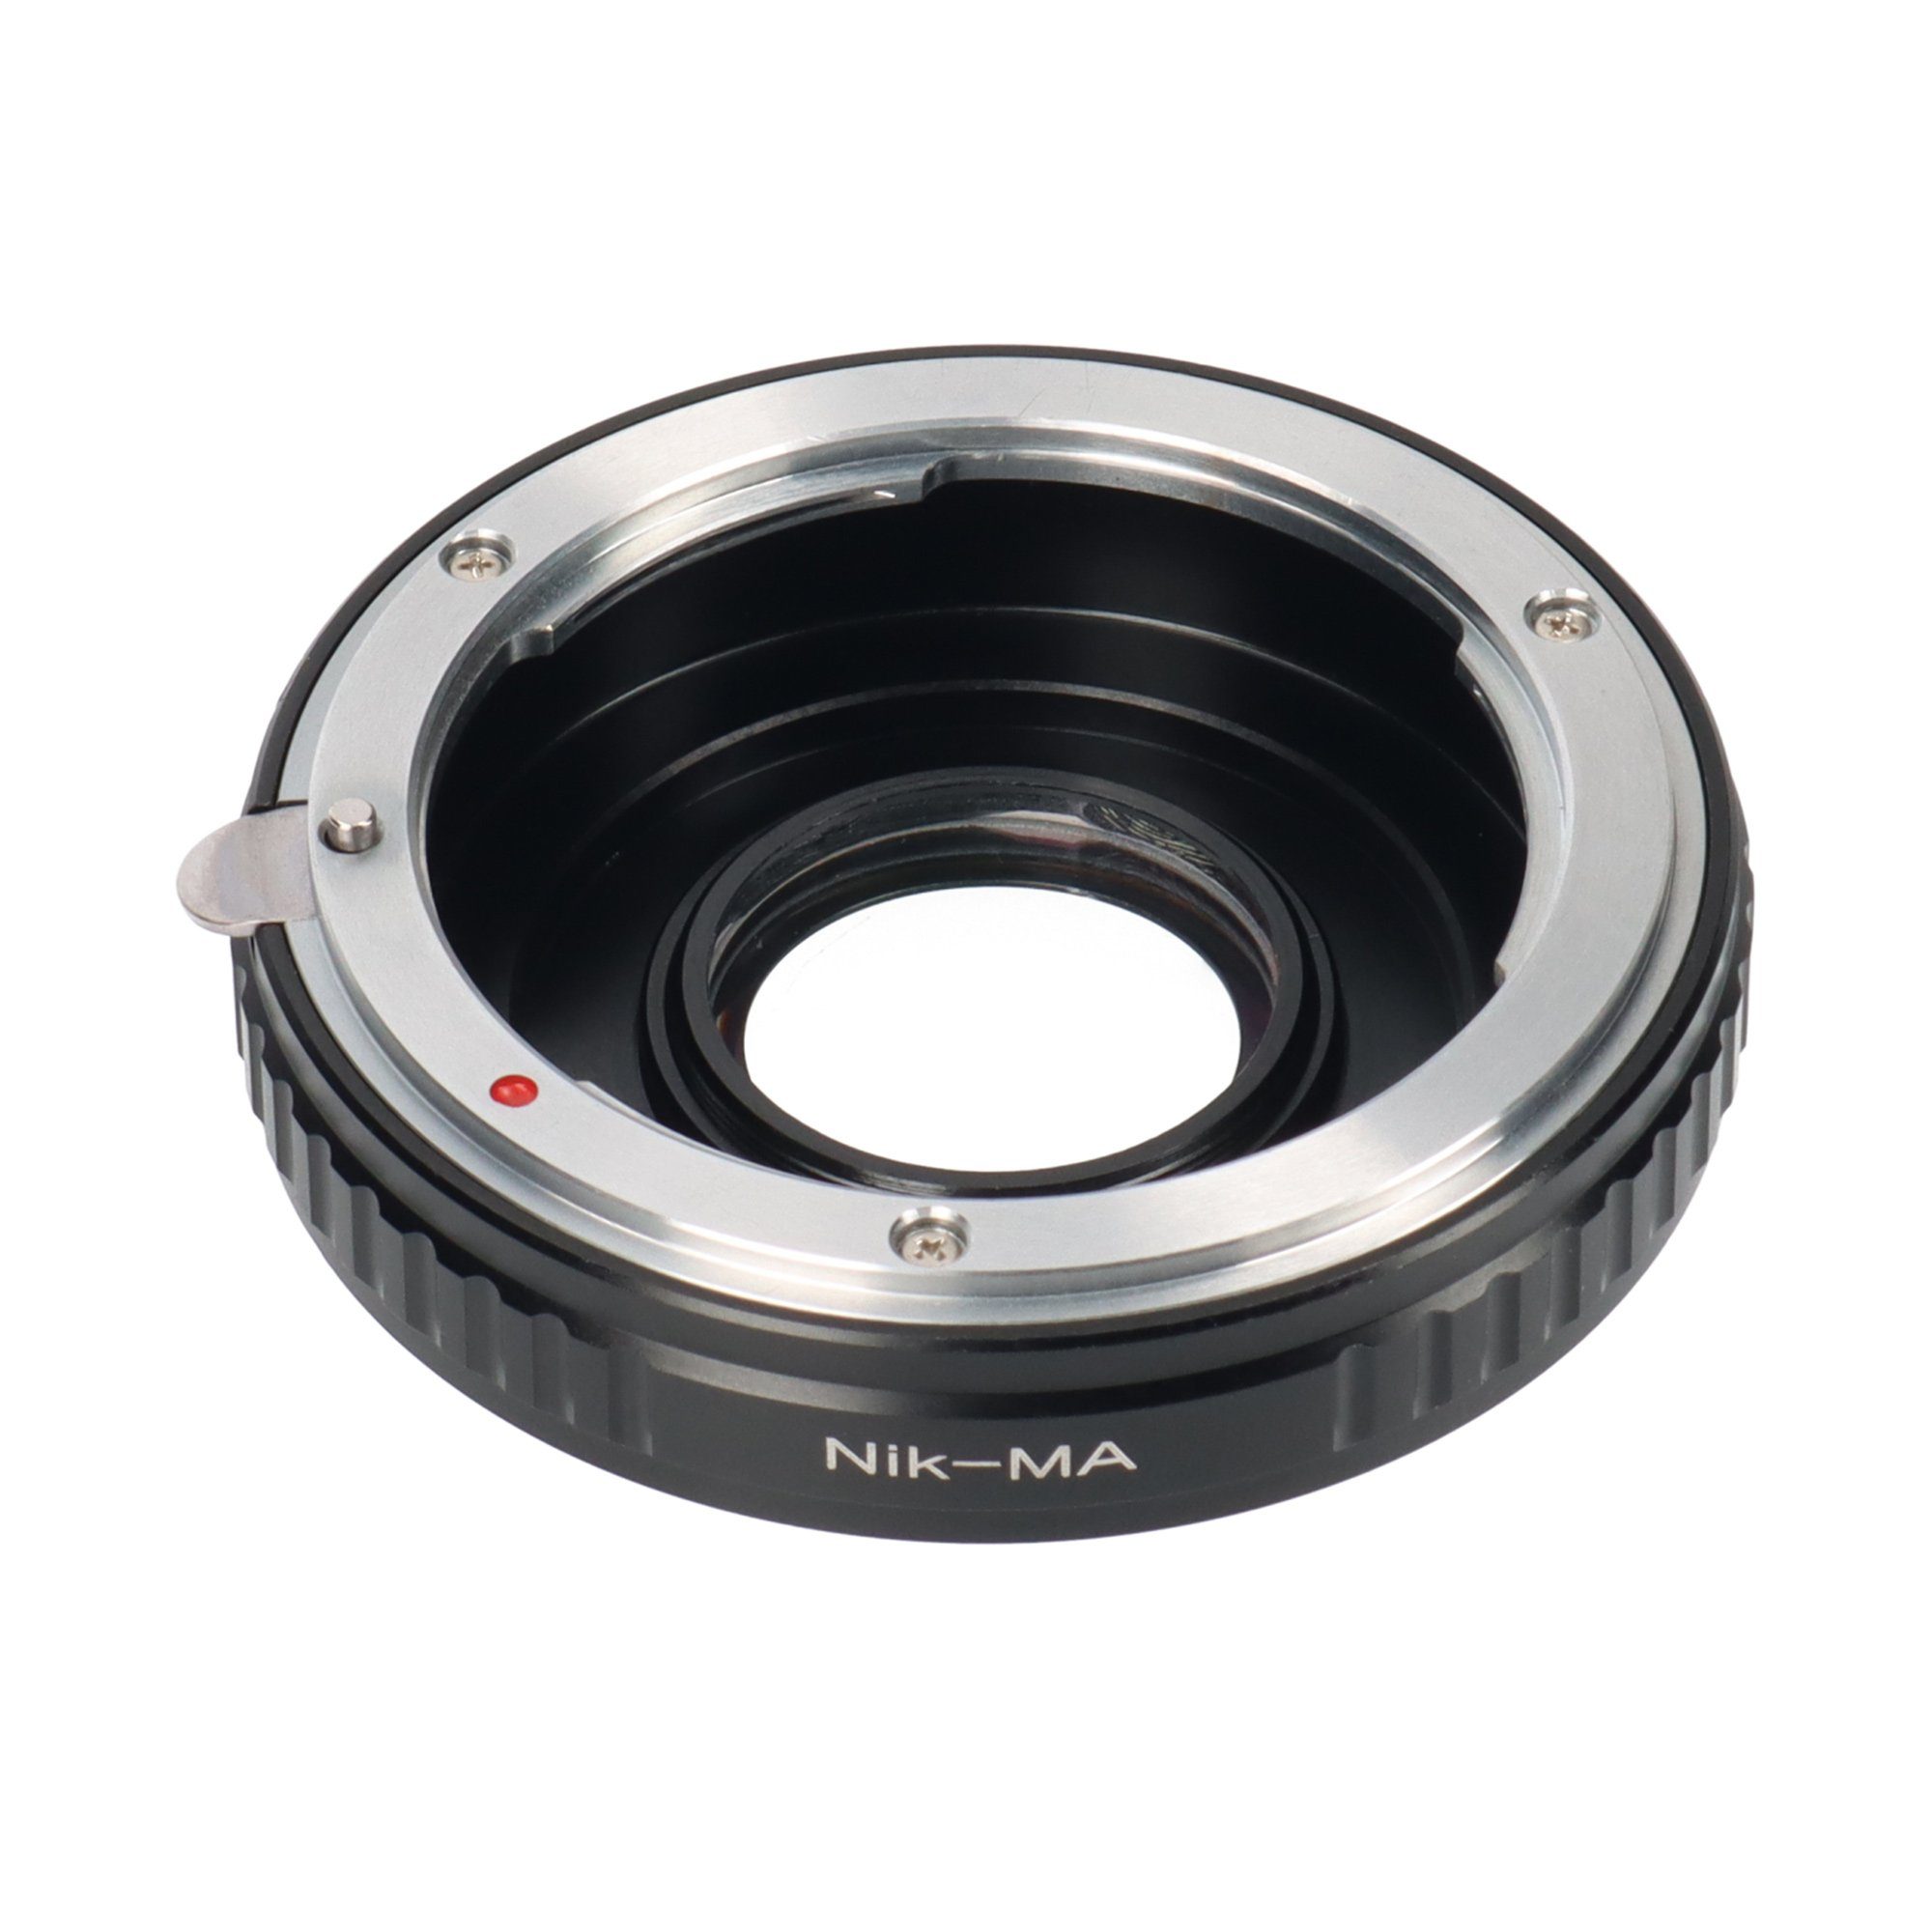 F-Objektive Alpha Sony Nikon Objektiveadapter + Korrekturlinse ayex - Adapter